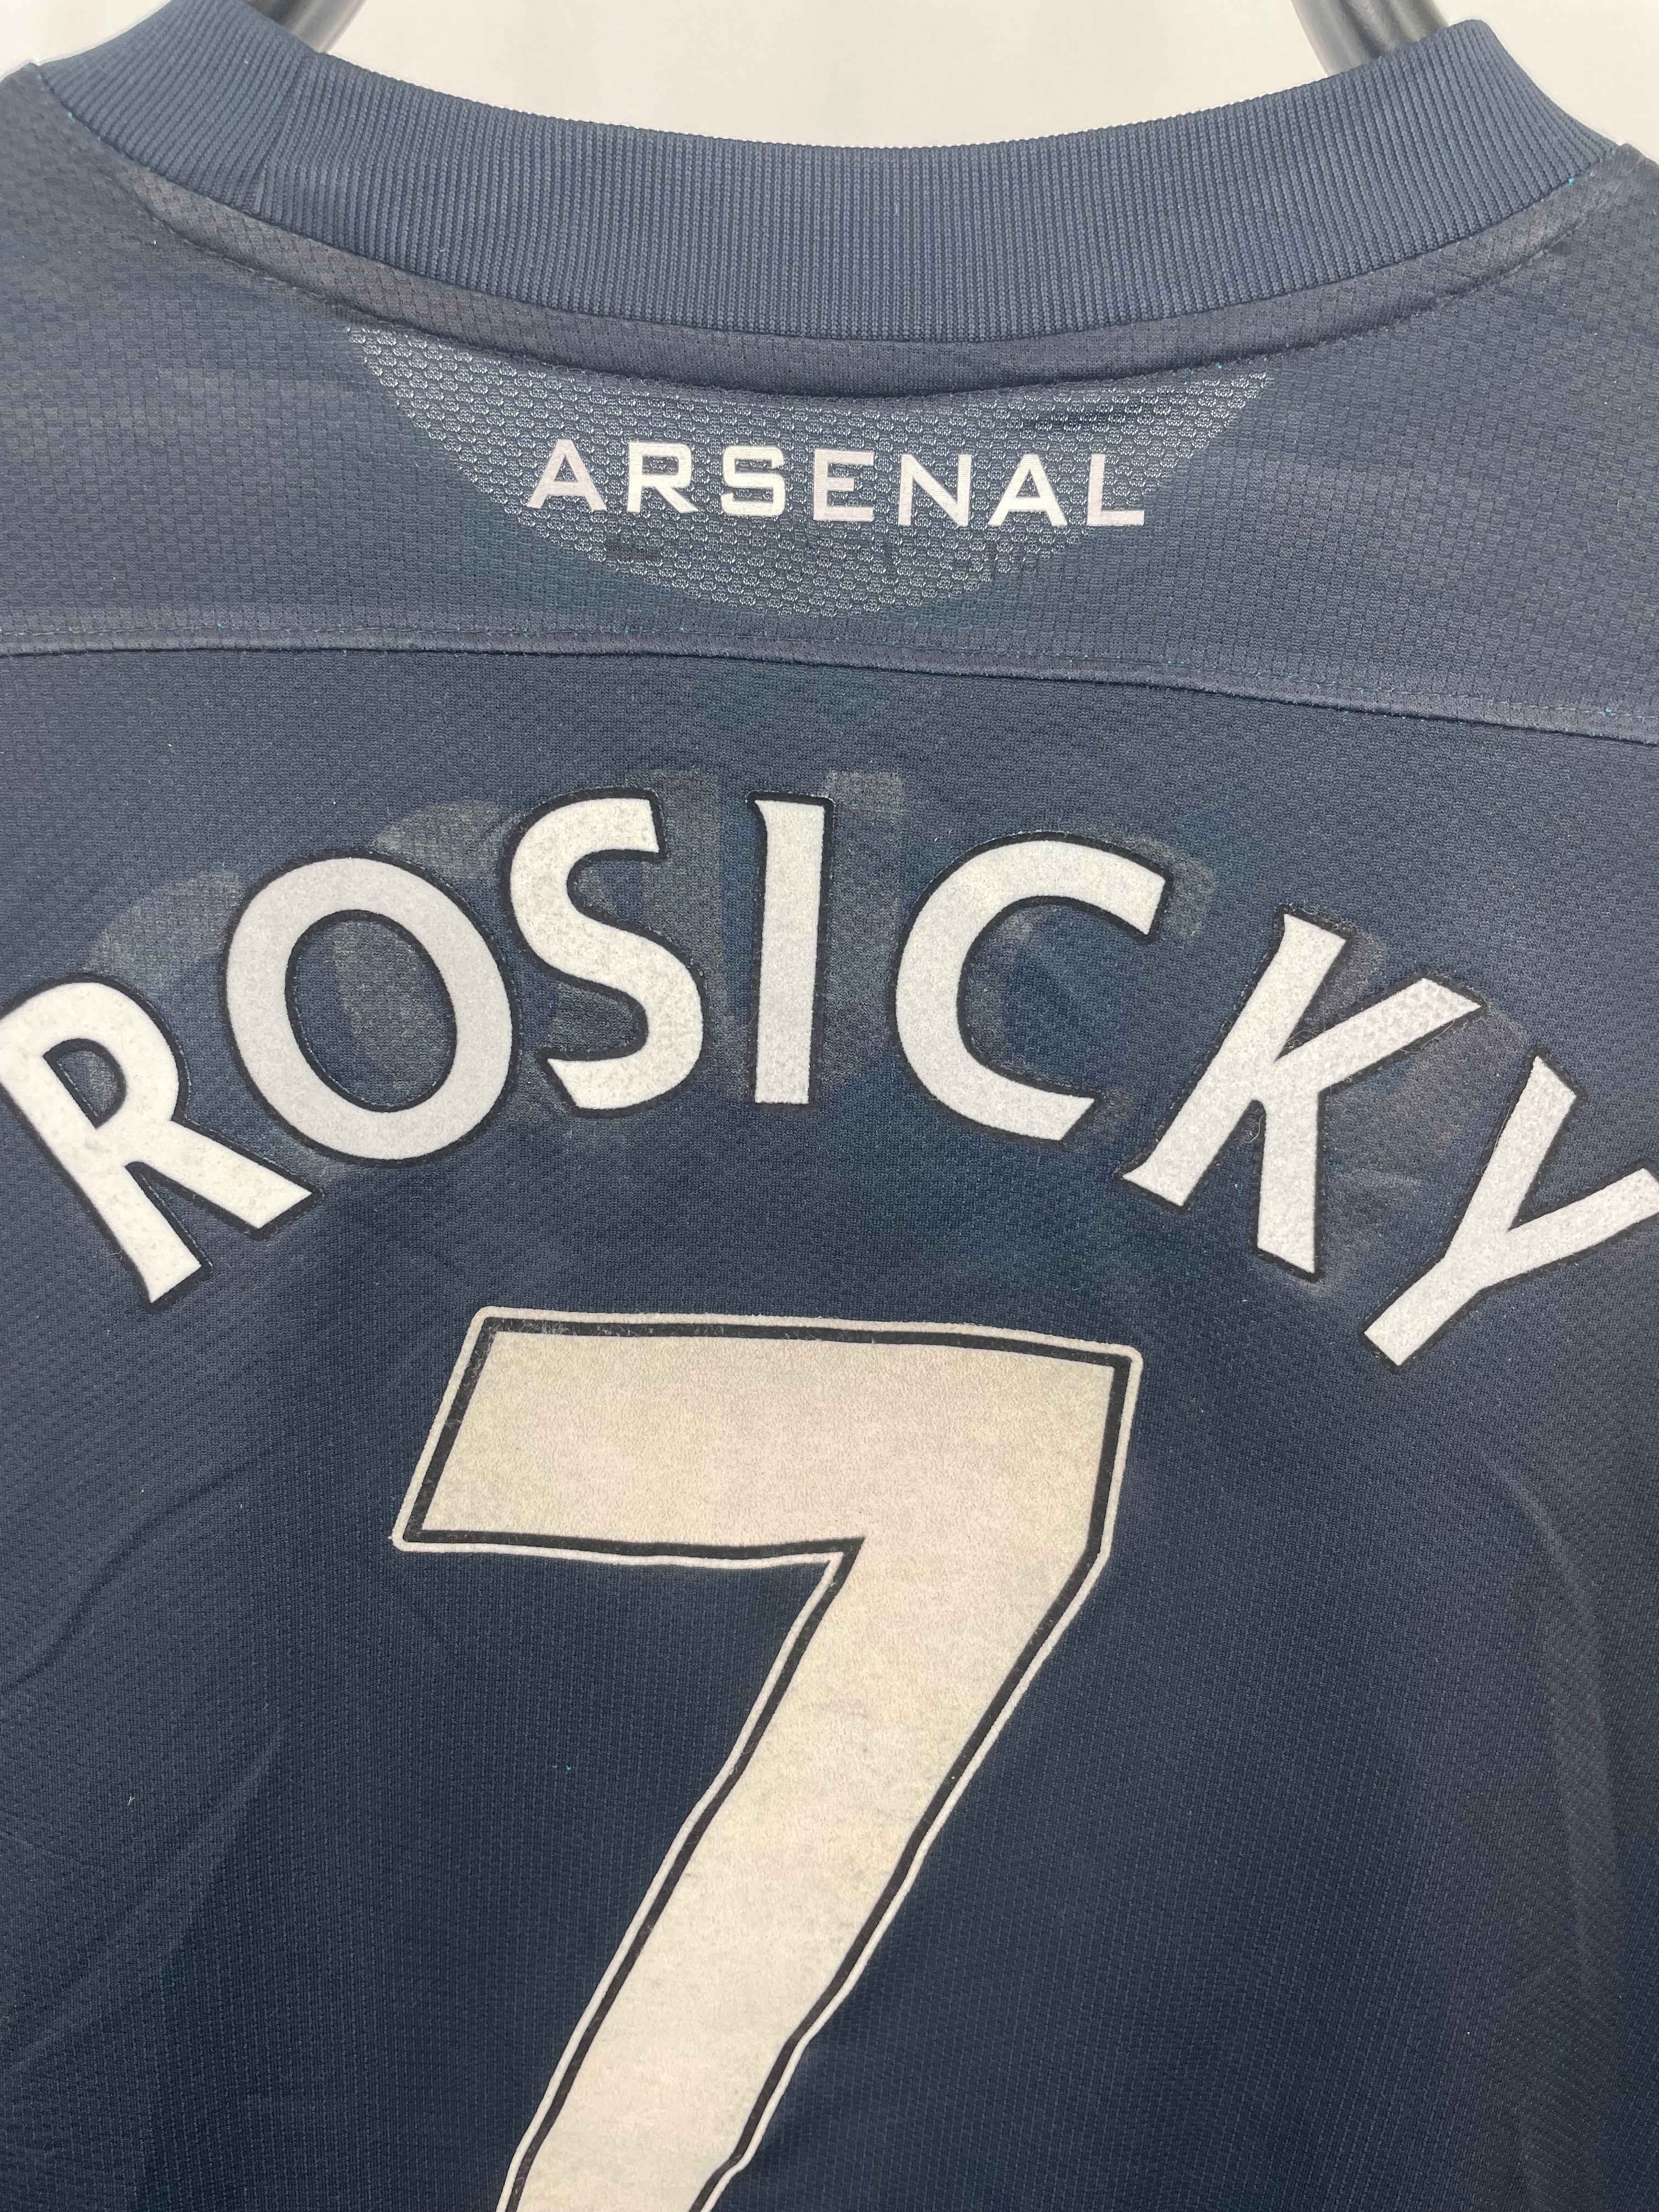 Rosicky Arsenal 11/12 langærmet udebanetrøje - XL